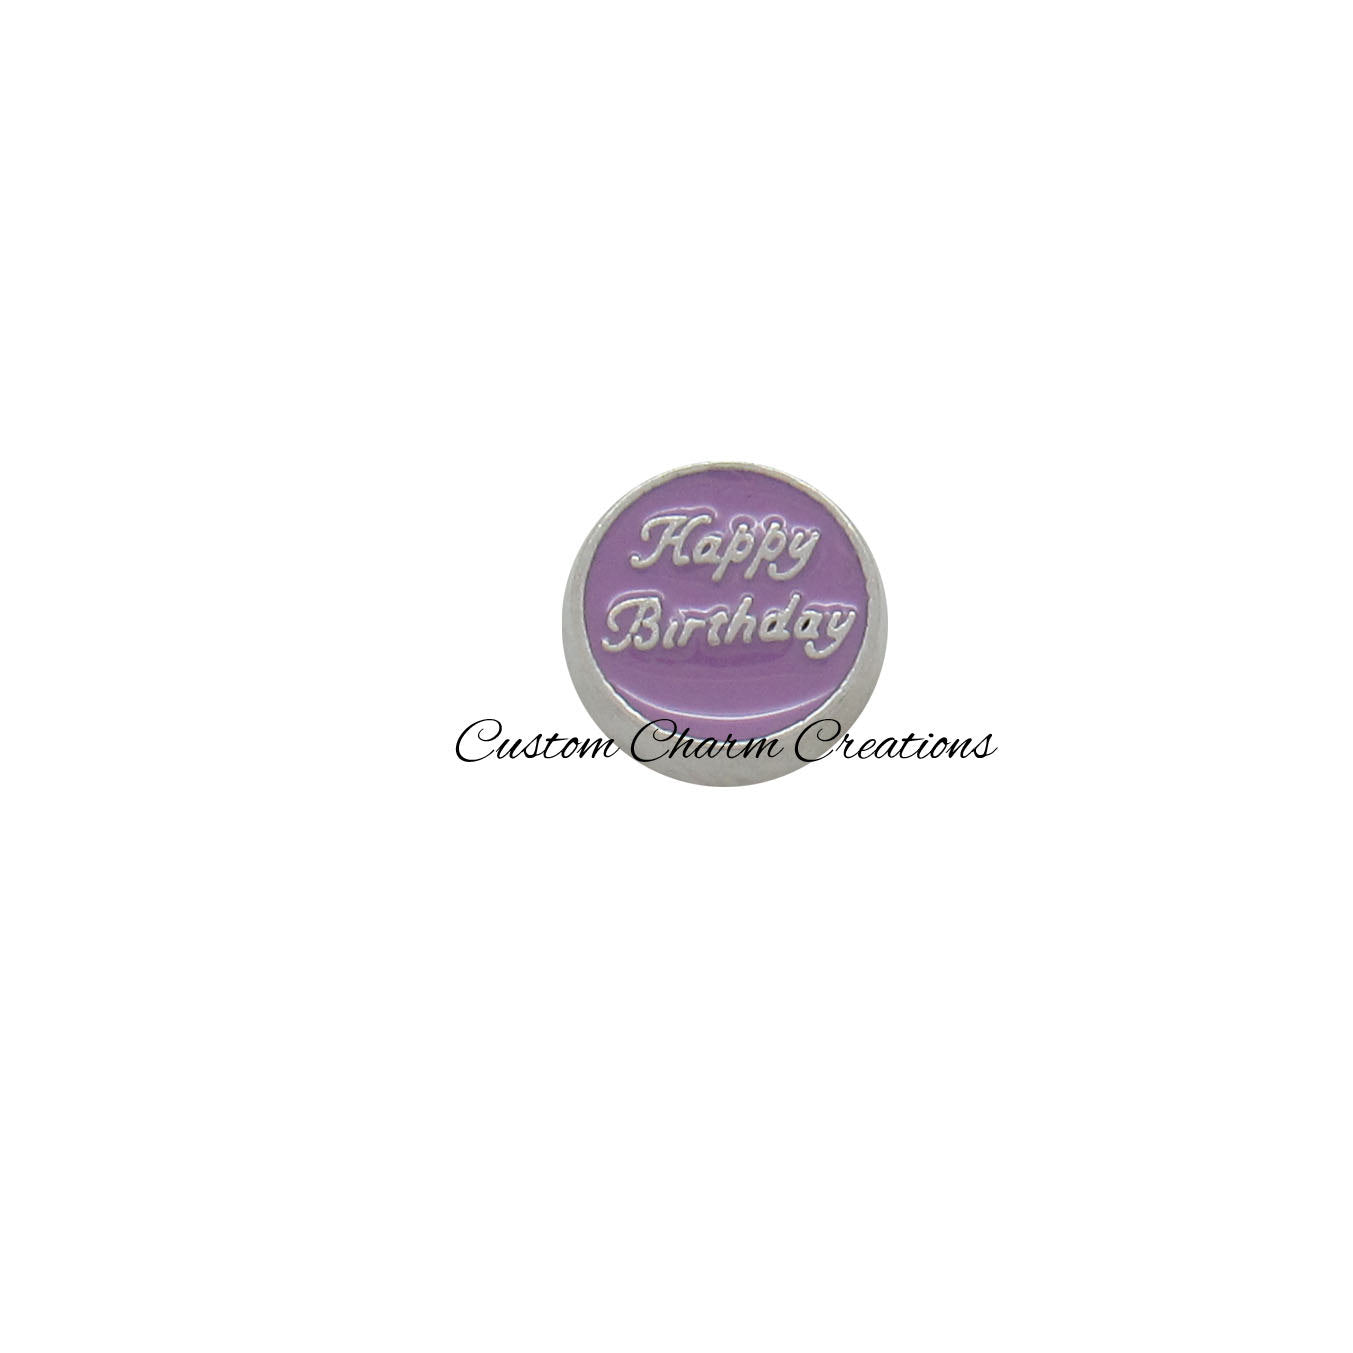 Purple Happy Birthday Floating Locket Memory Charm - Custom Charm Creations